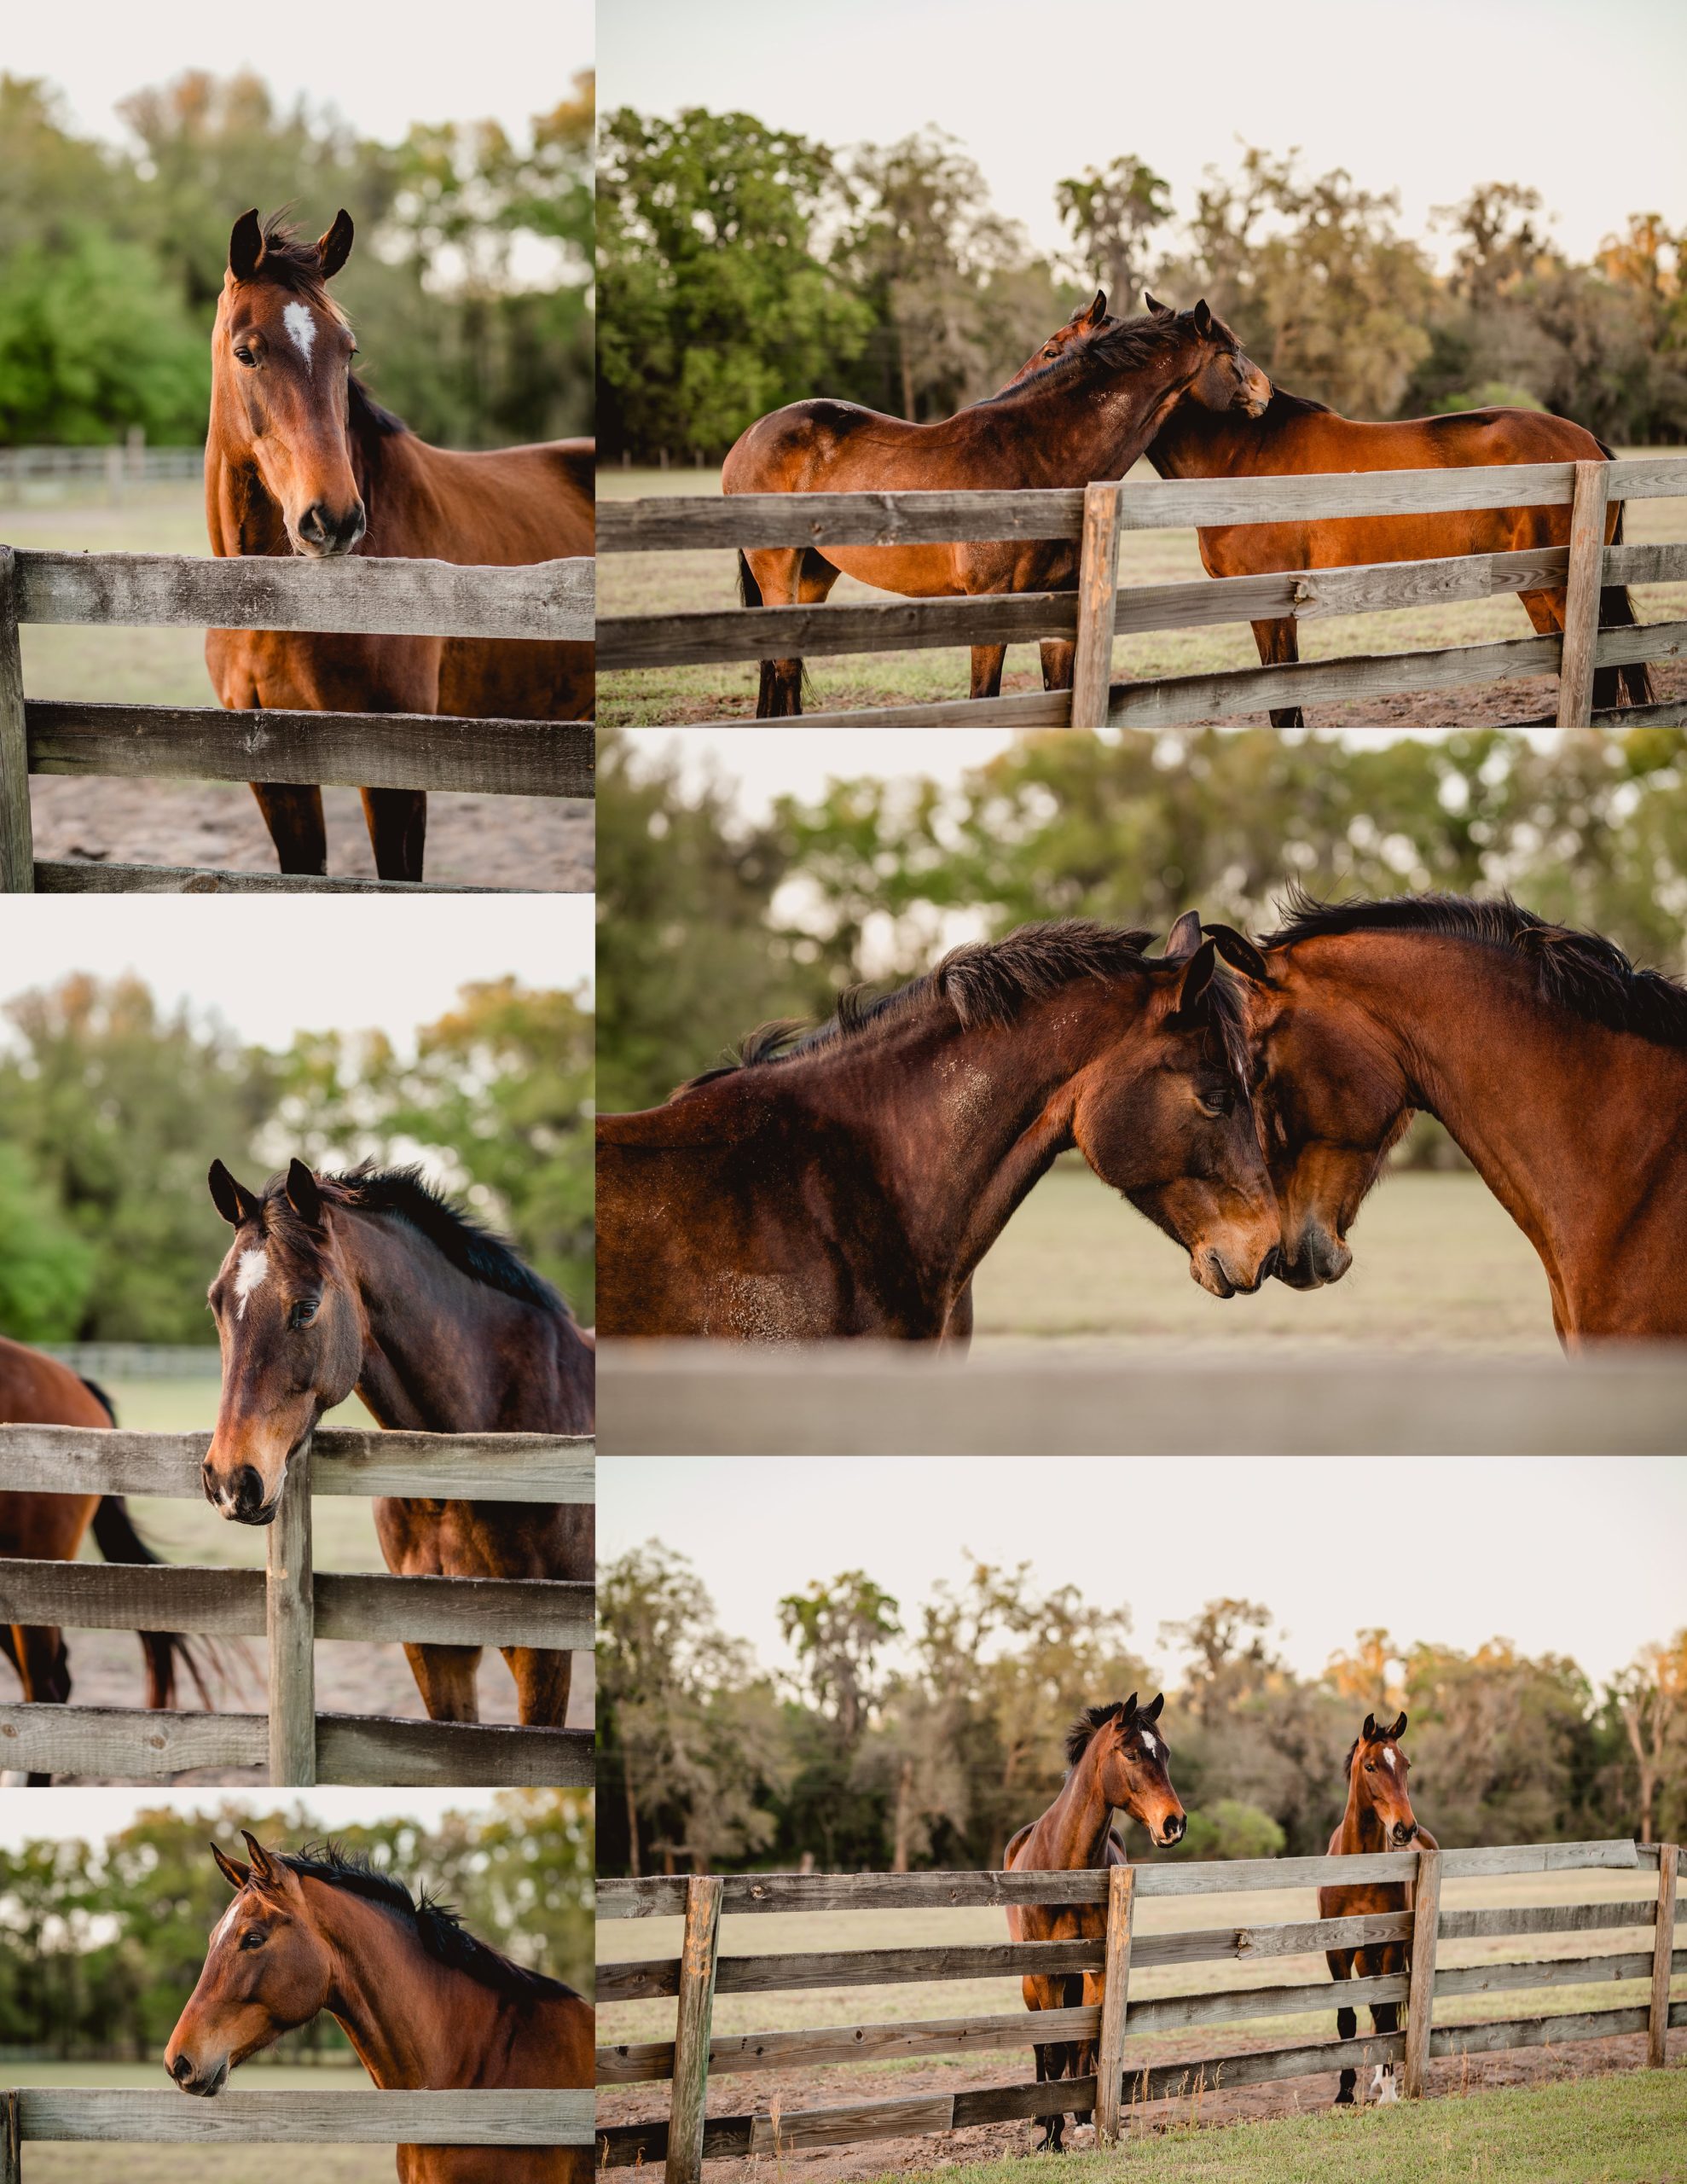 North Florida horse barns with Warmblood dressage mares.